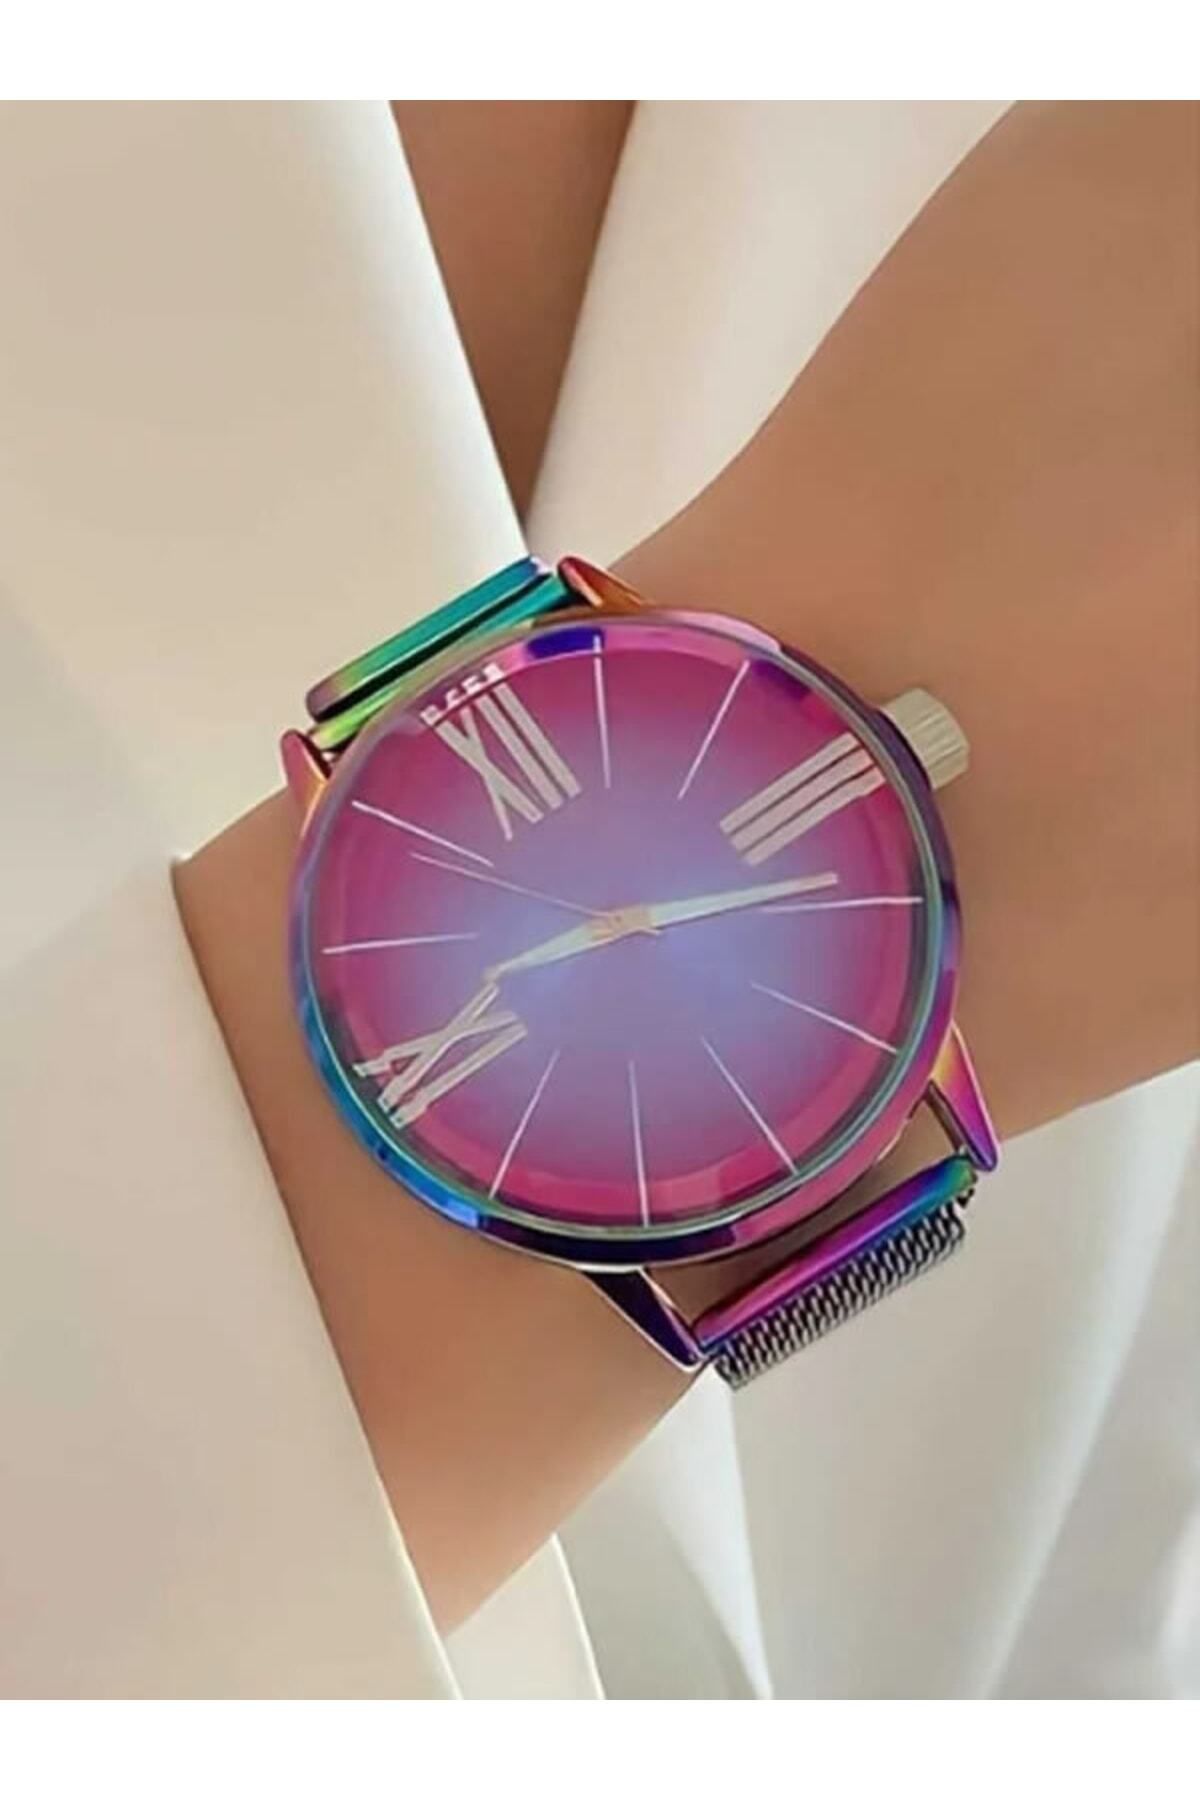 İSTLİV Unisex Model Renkli Ekran Mıknatıslı Kol Saati